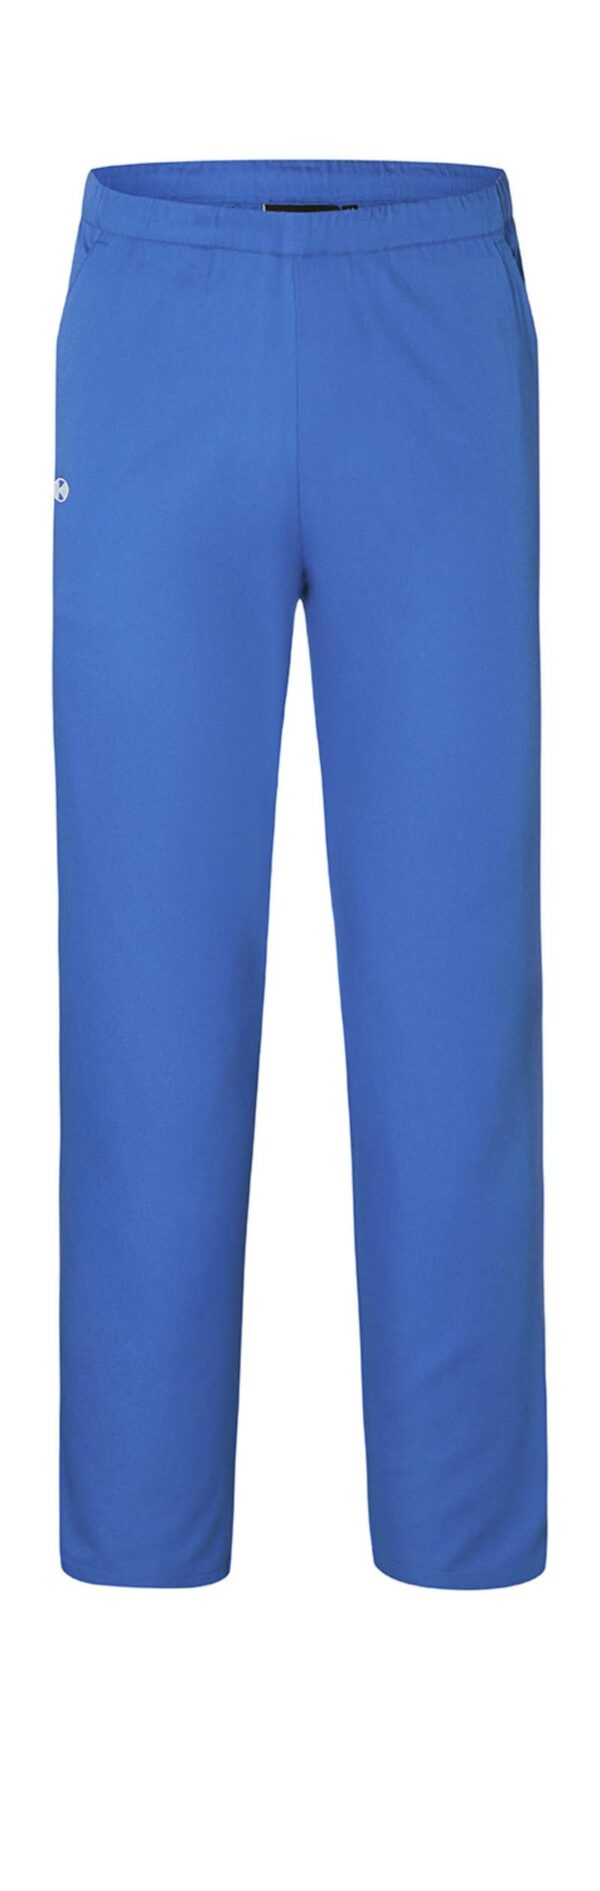 Slip on Trousers Essential Kleur Royal Blue